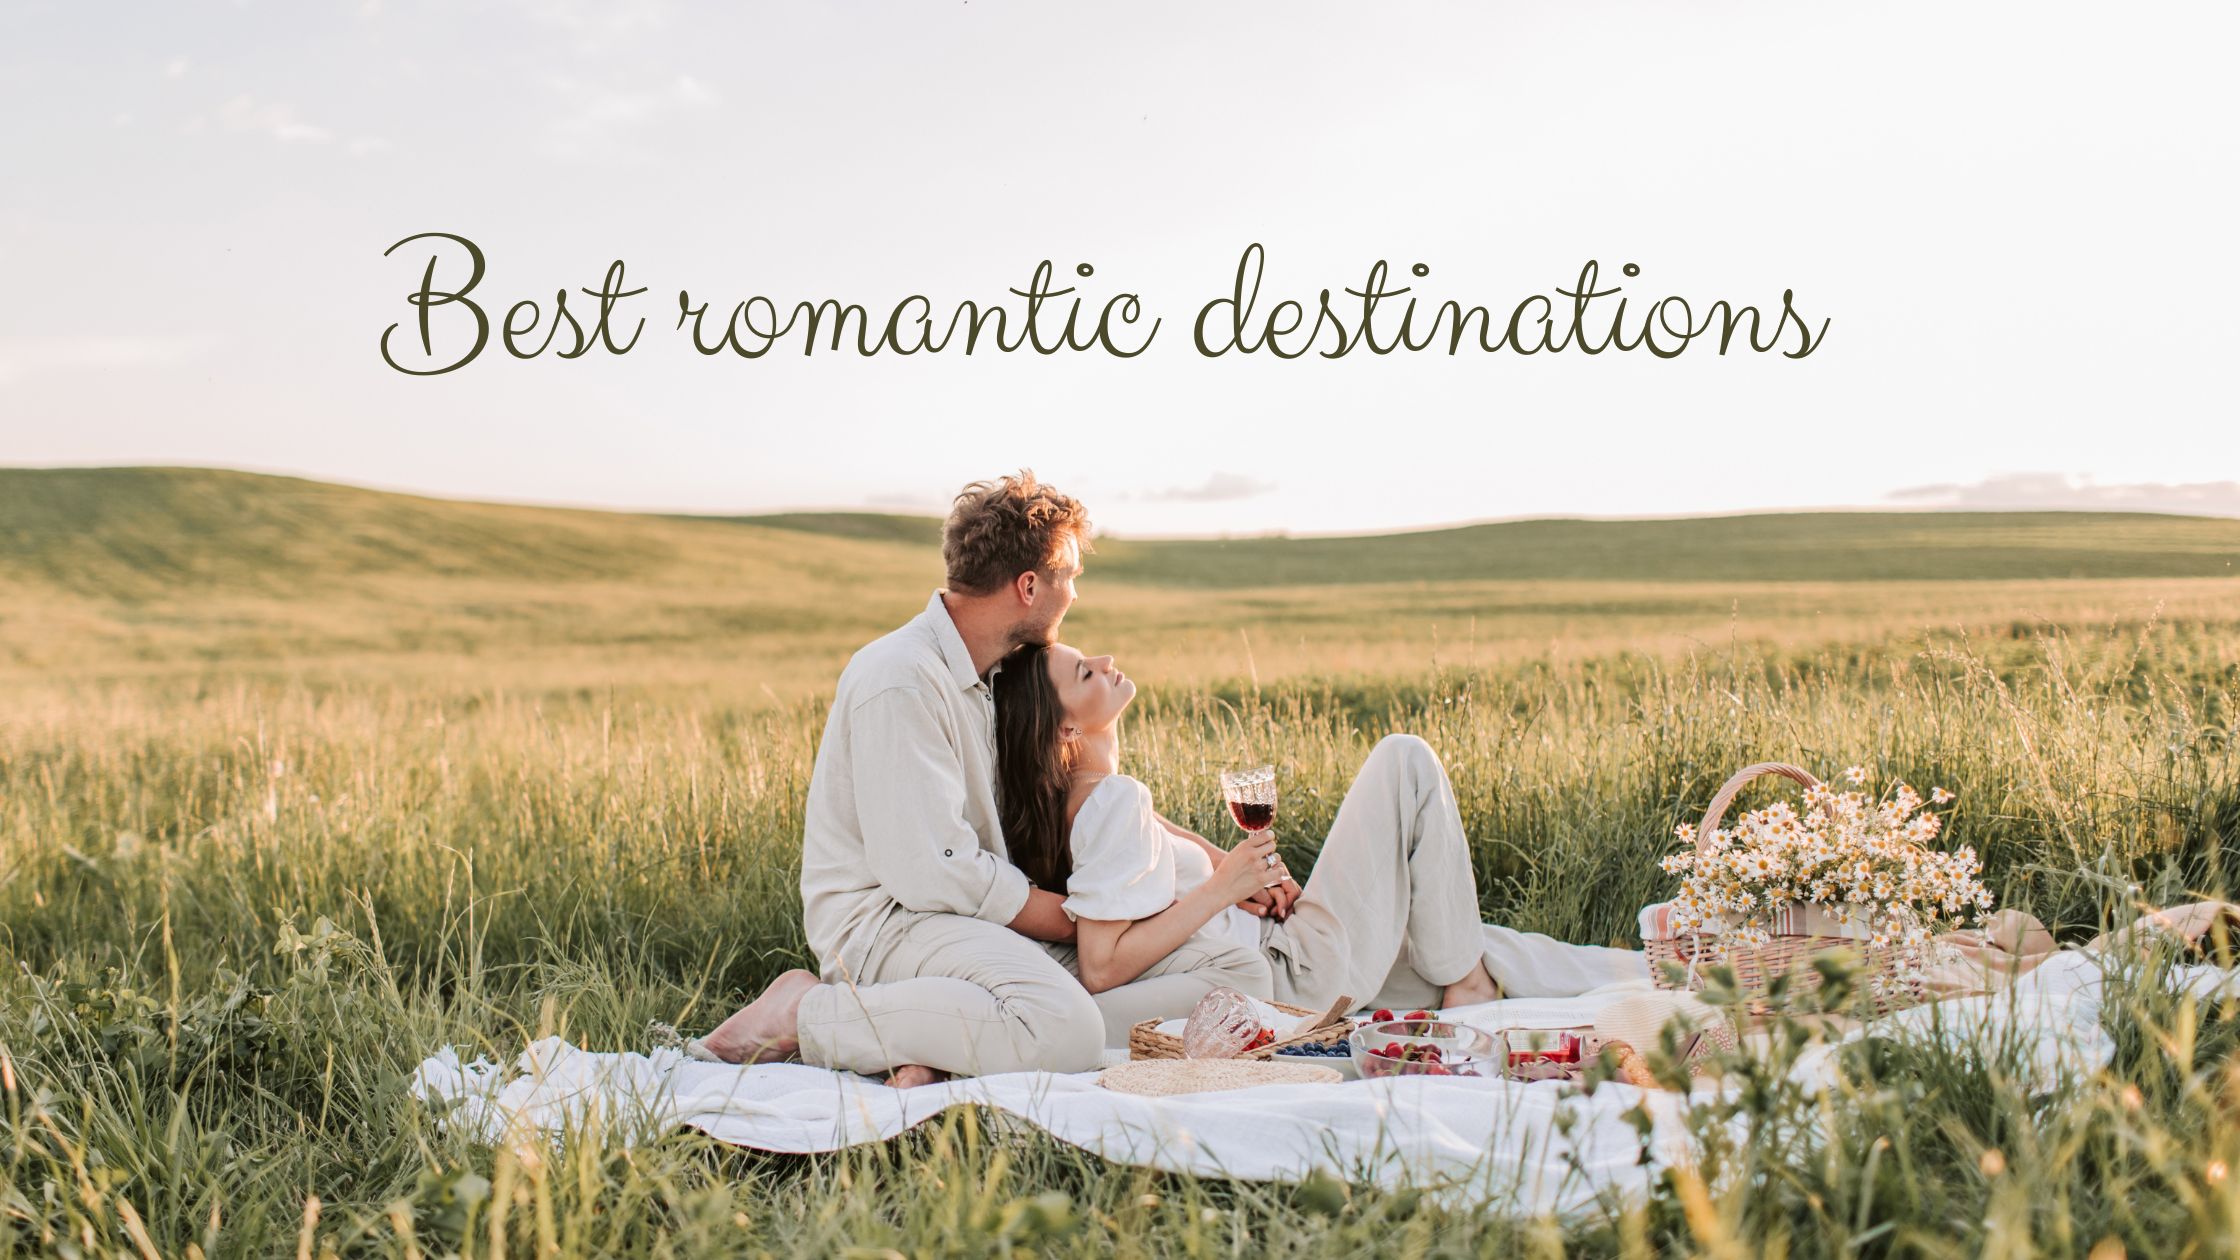 Best romantic destinations